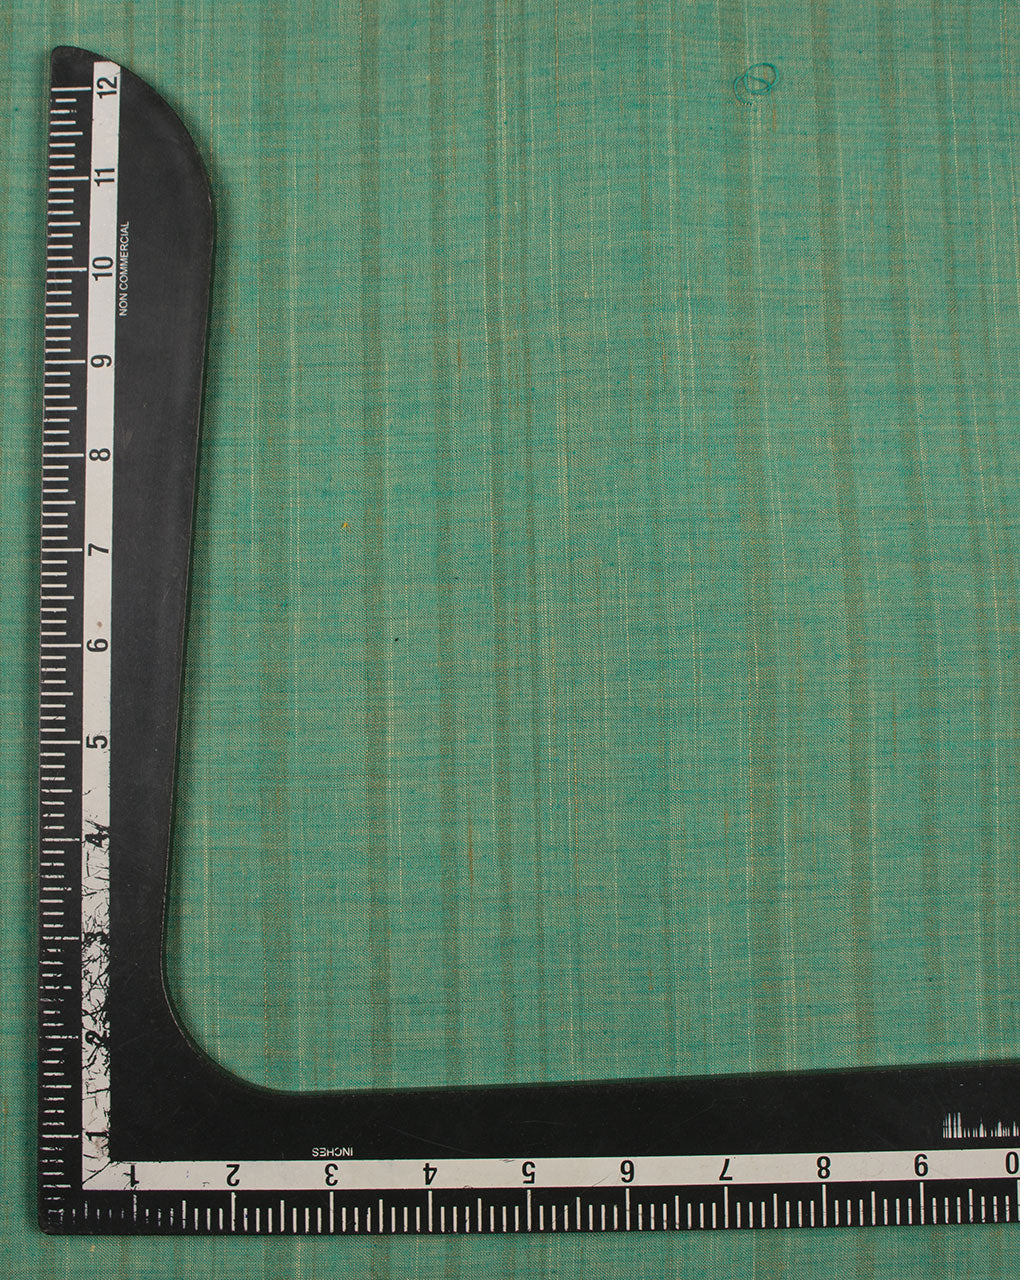 Sea Green Plain Woven Loom Textured Cotton Fabric - Fabriclore.com